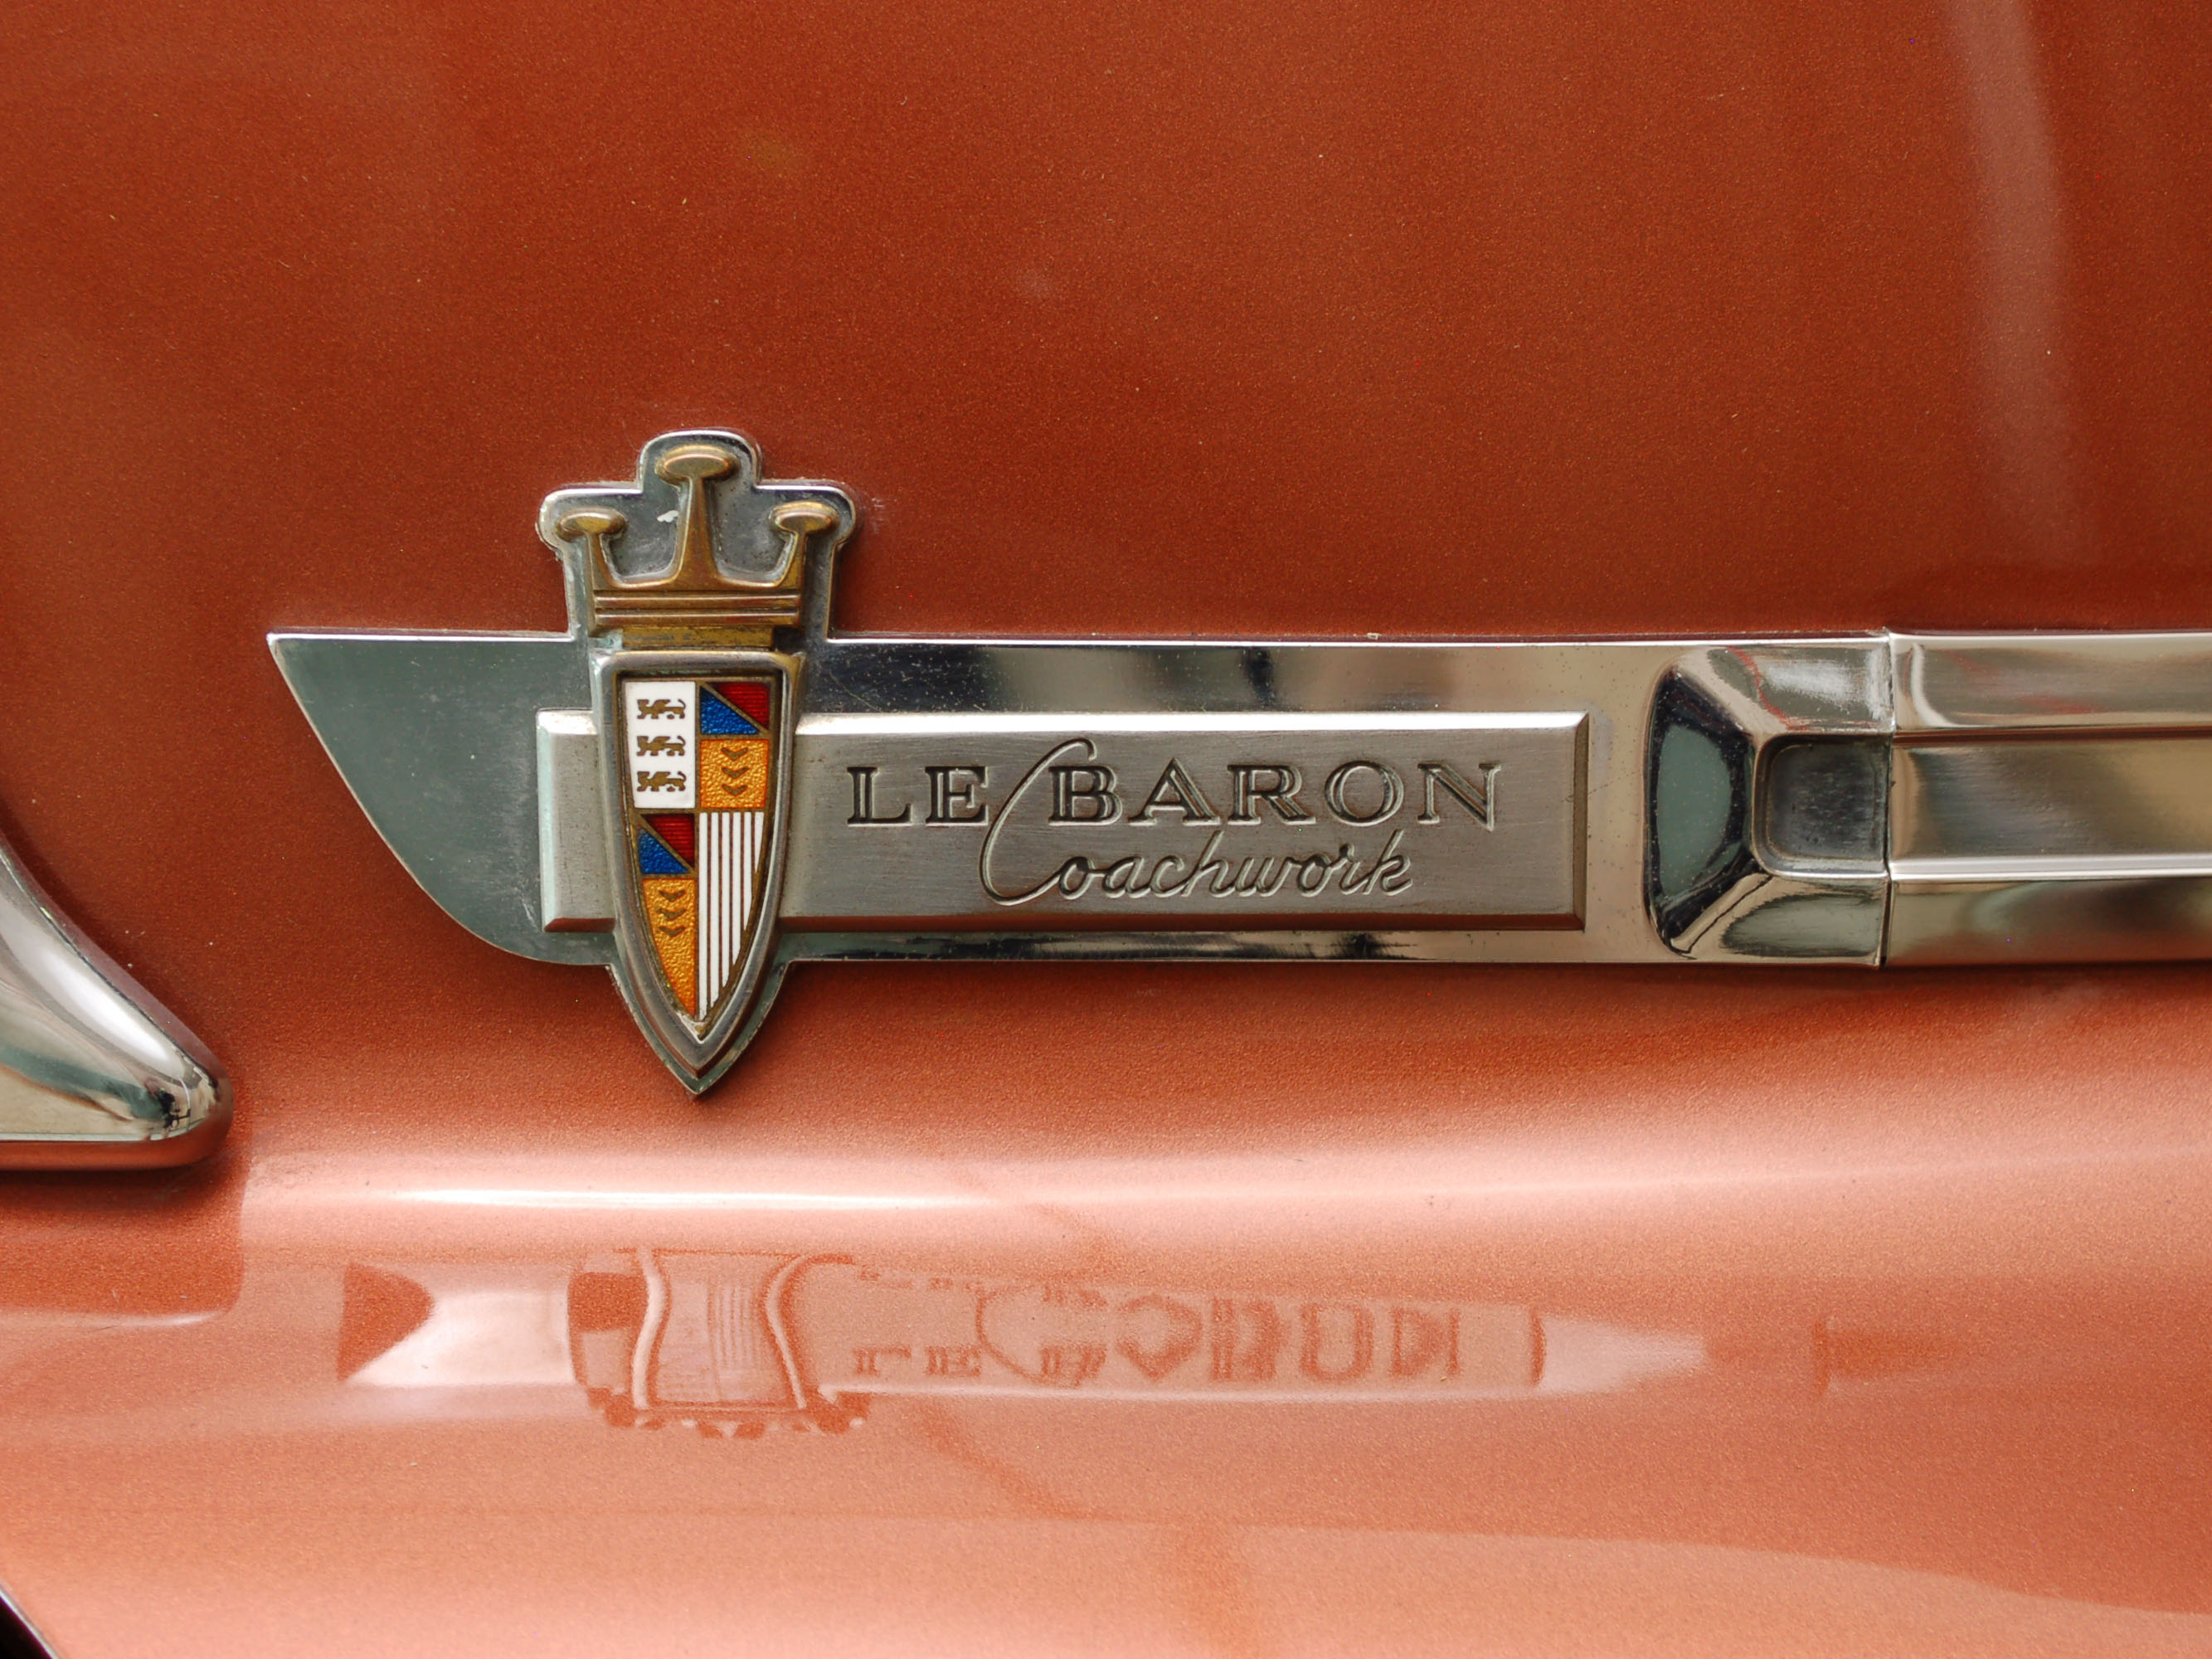 1961 imperial custom southampton